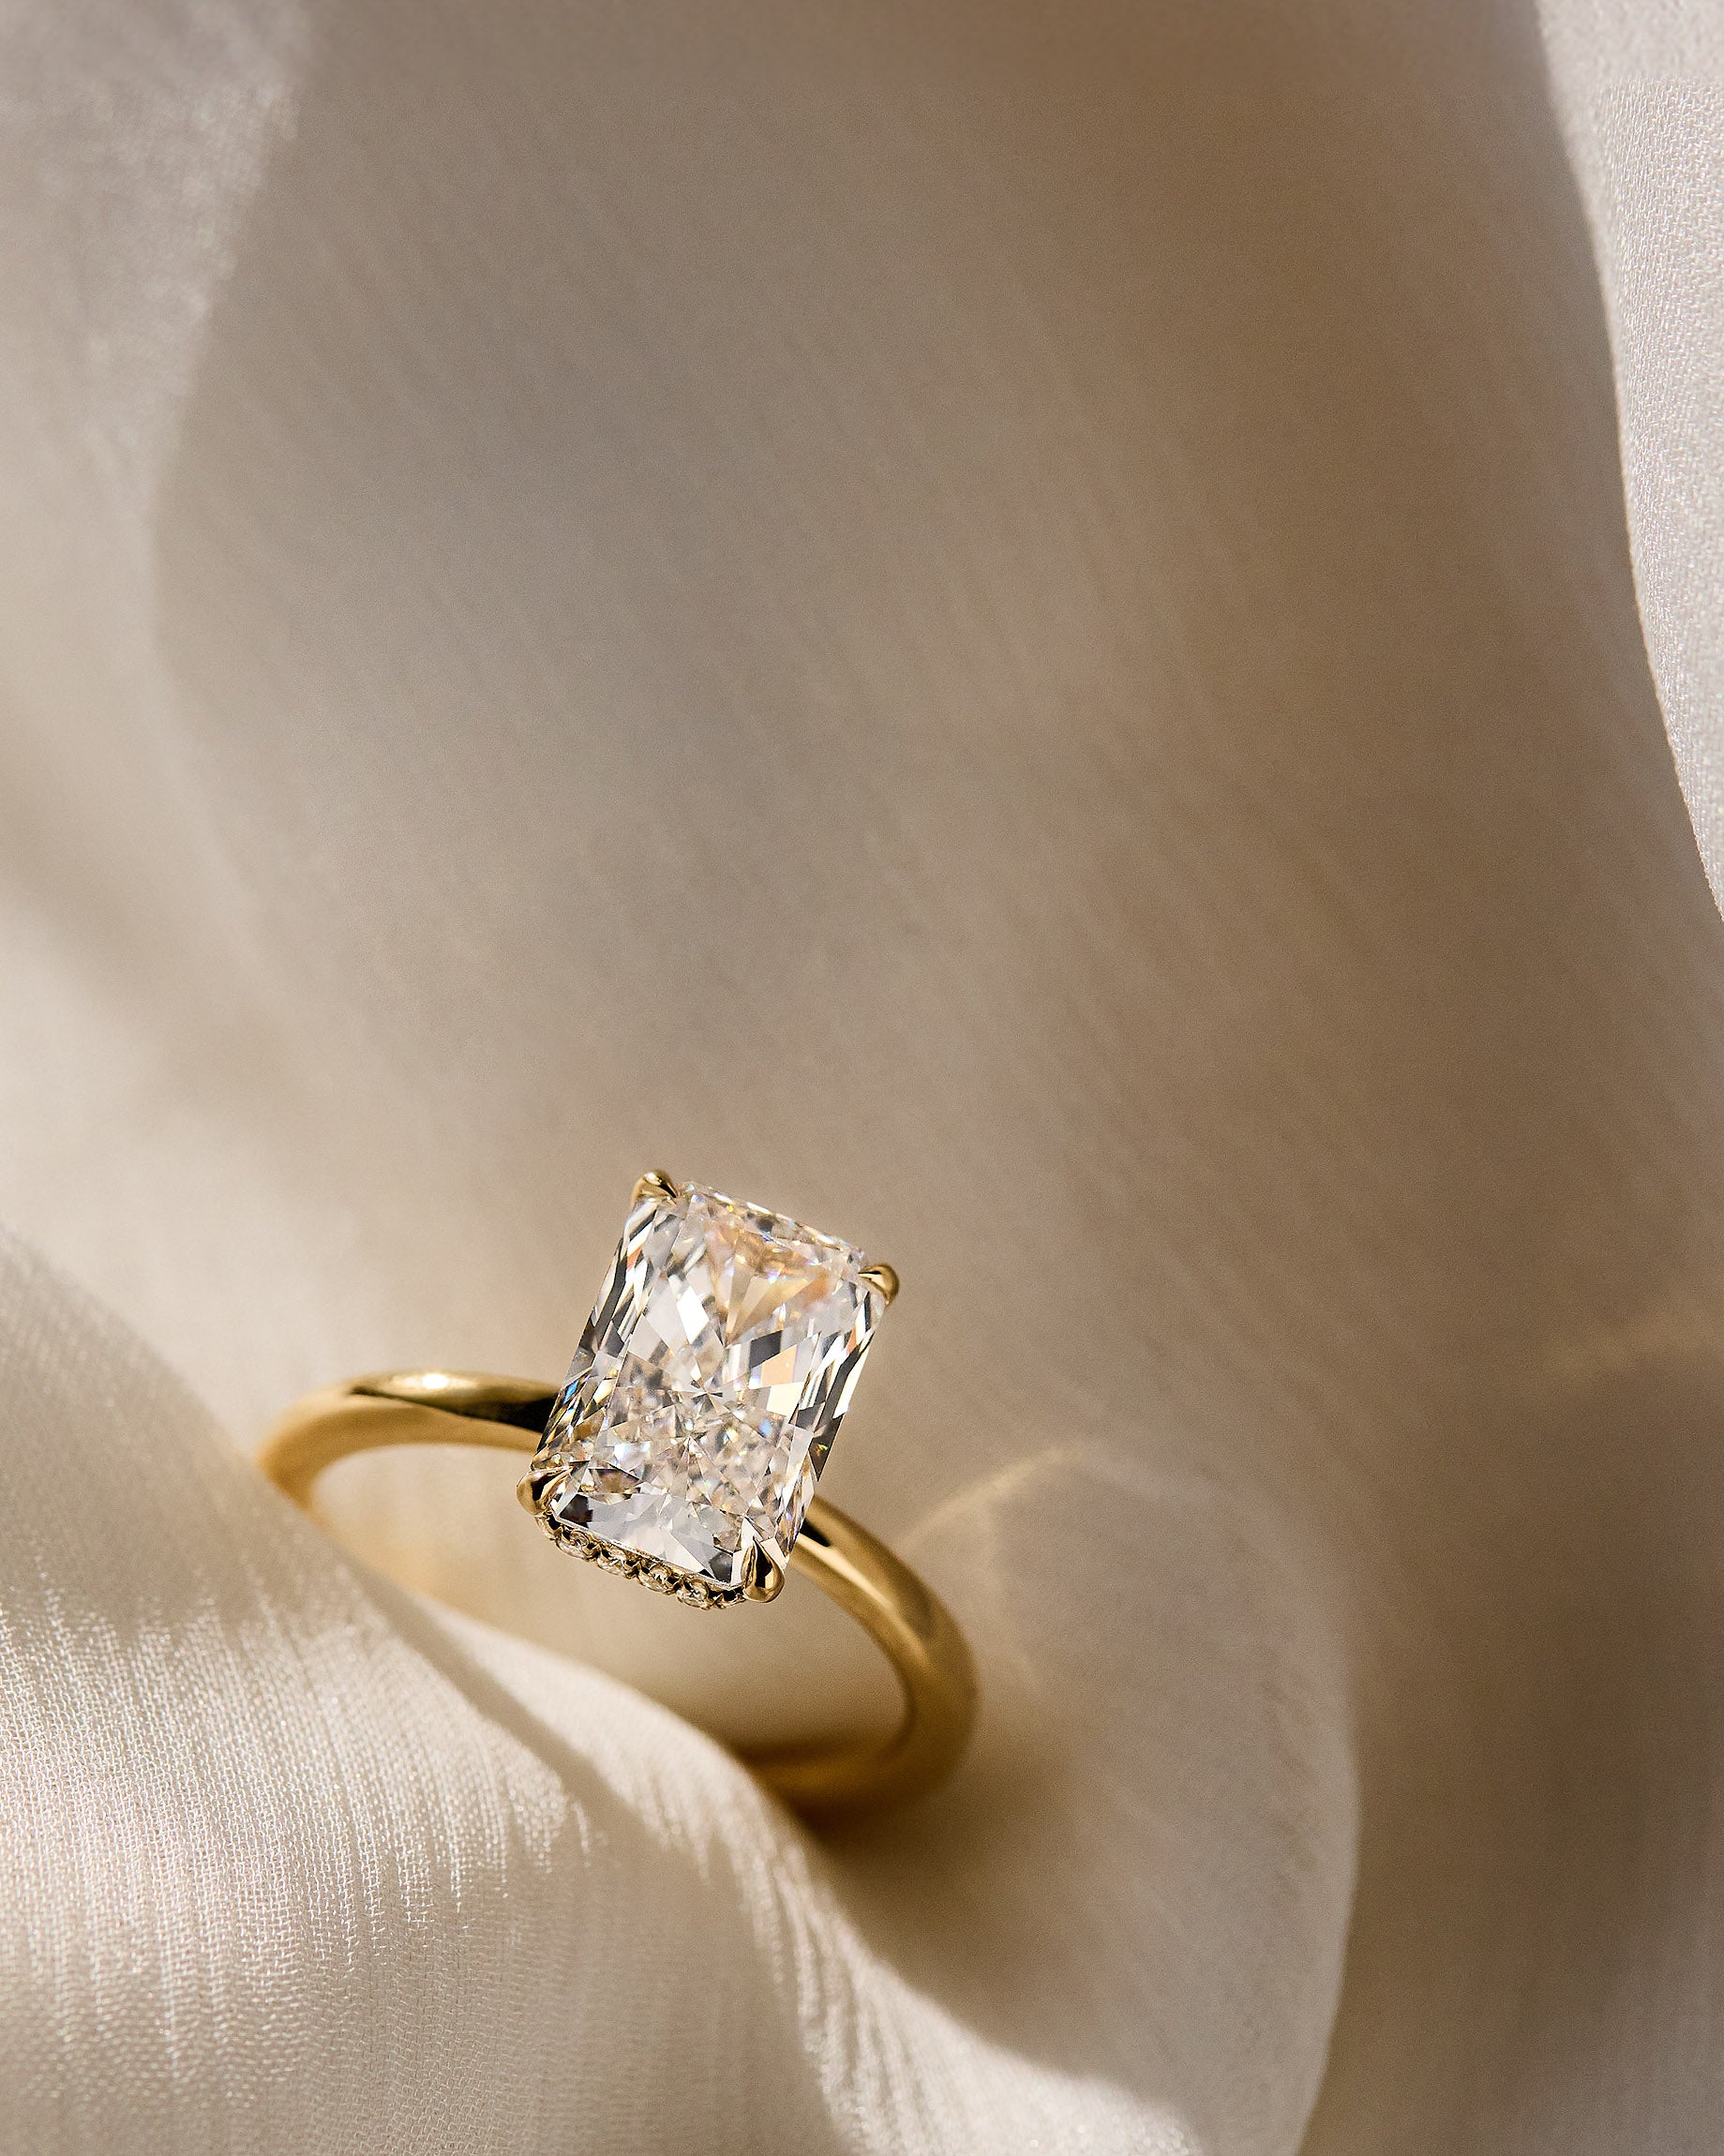 Diamond Wedding Rings for Women: A Sparkling Symbol of Love